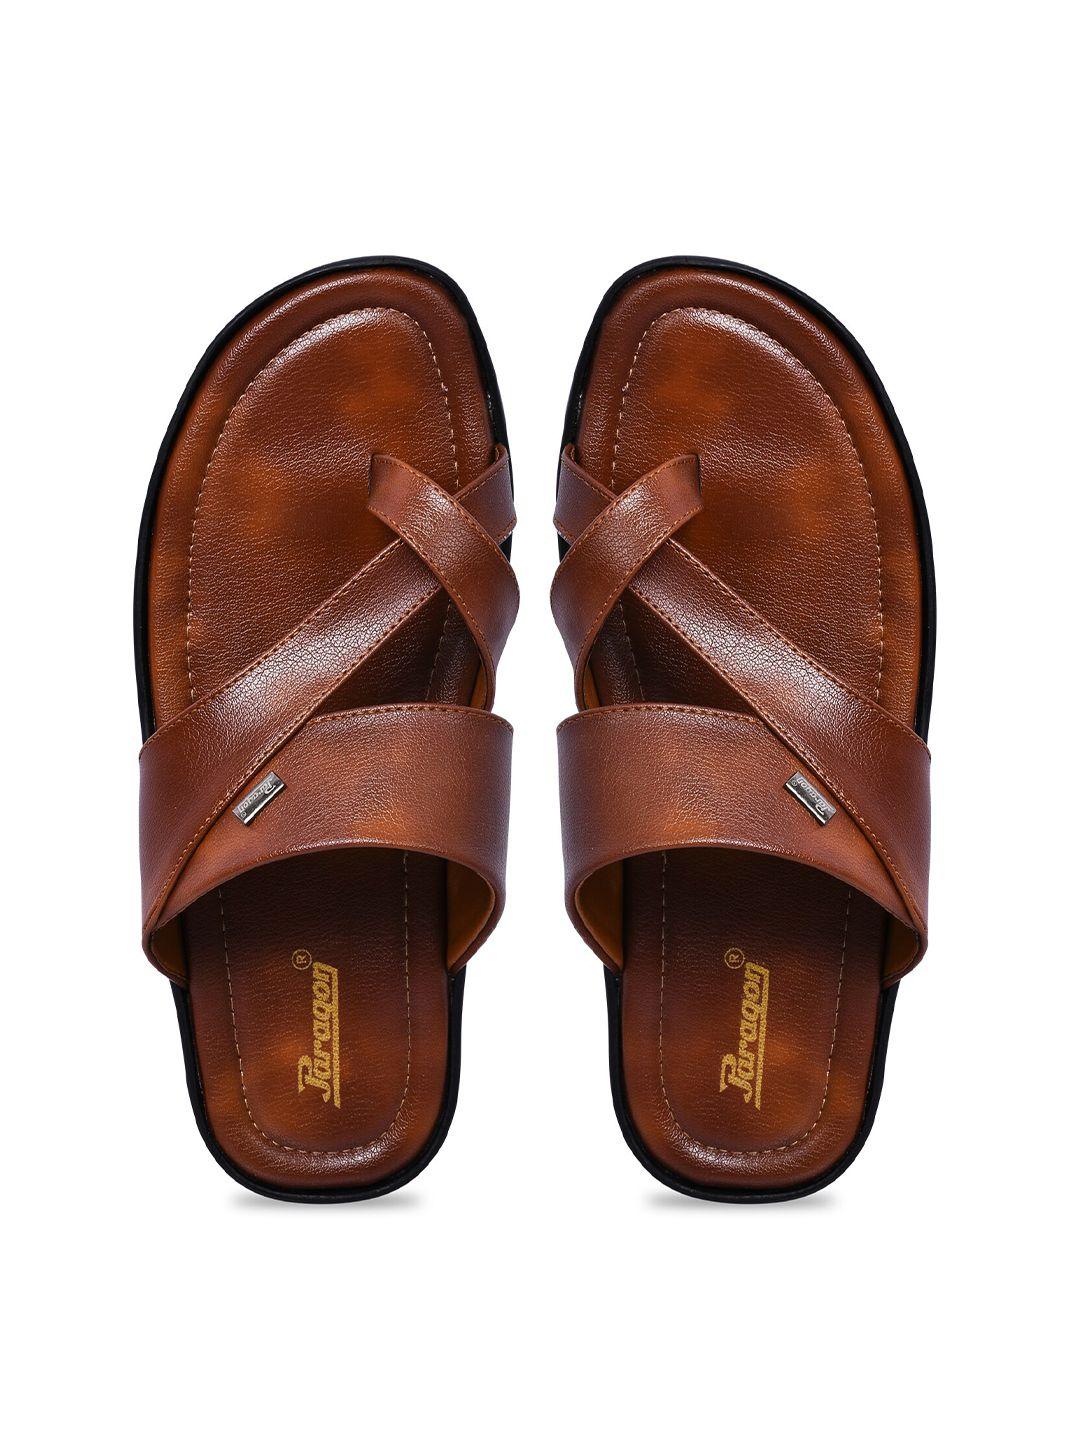 paragon-men-textured-lightweight-comfort-sandals